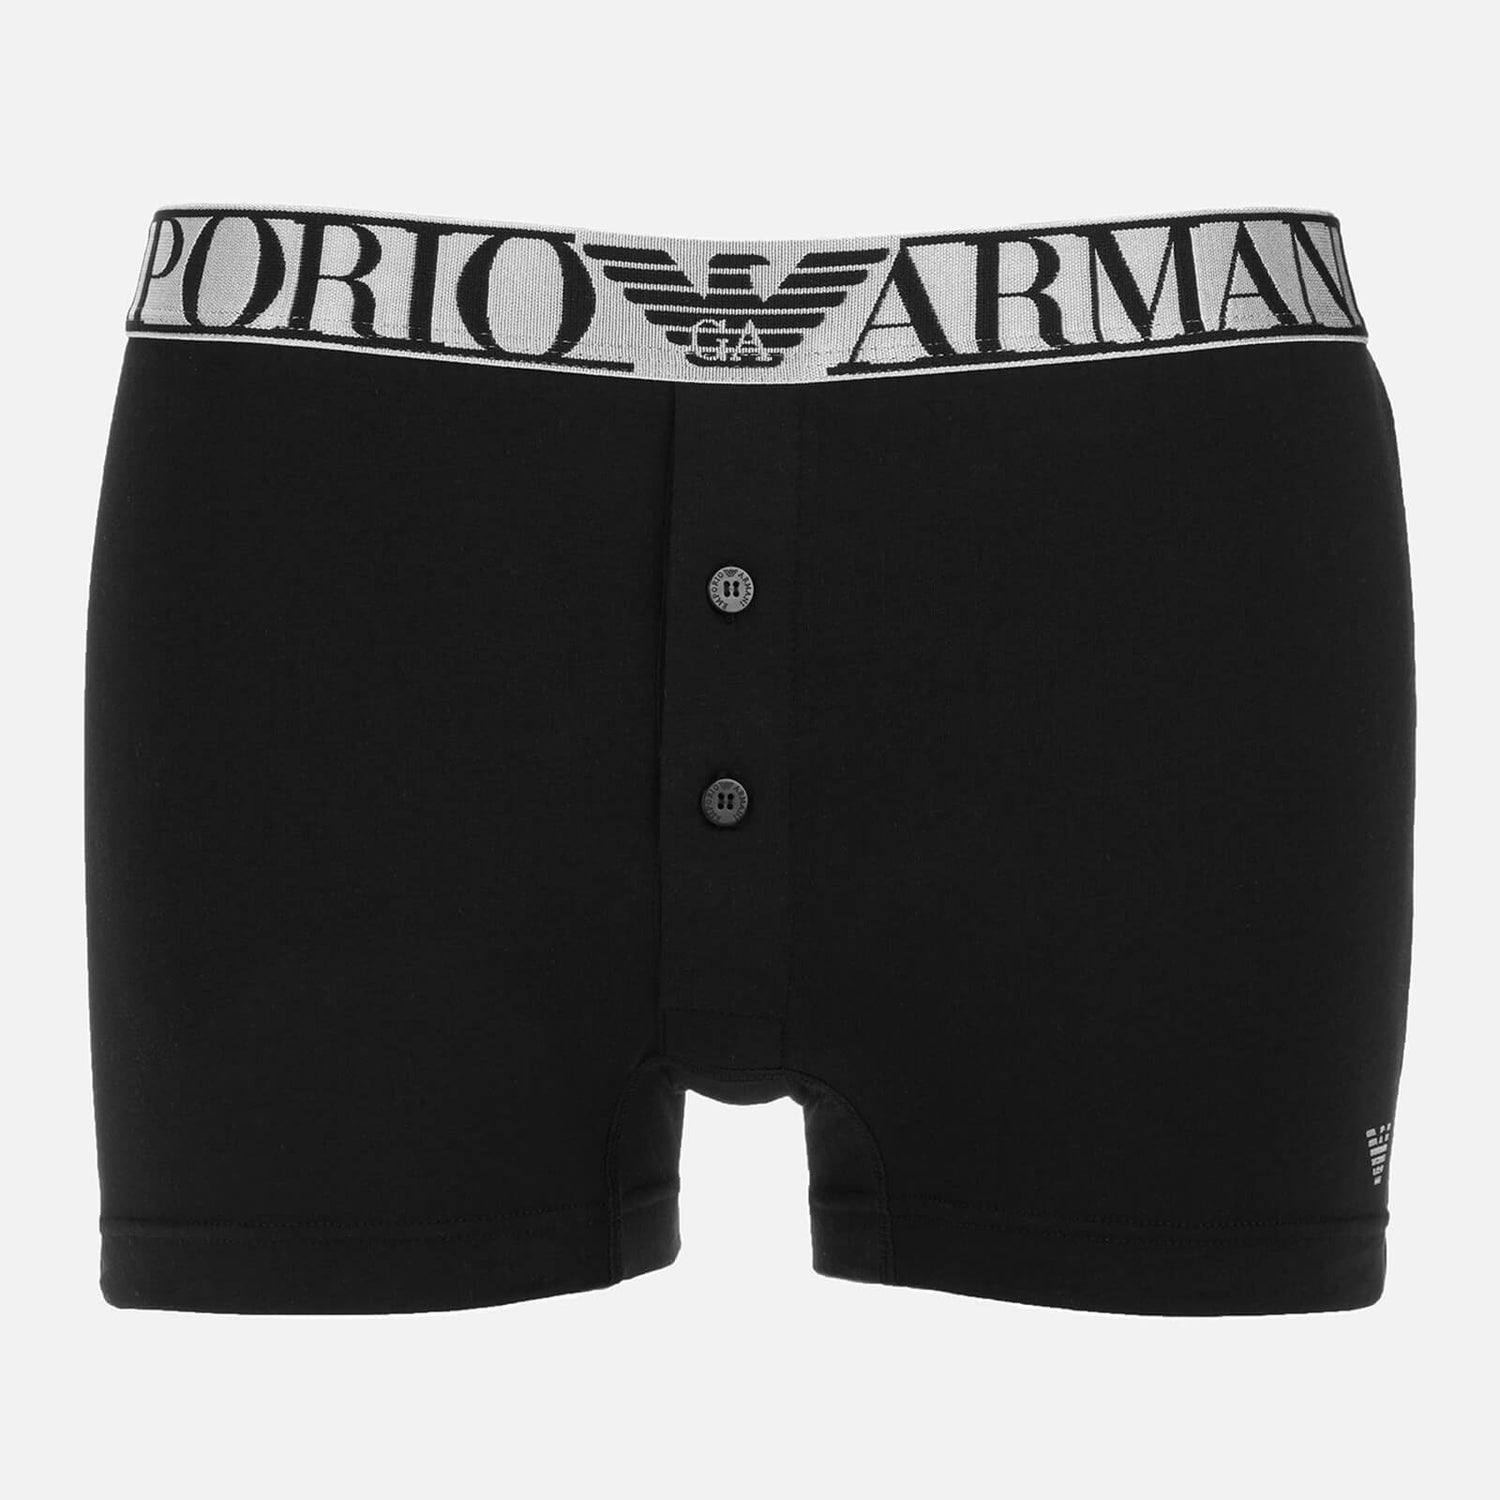 Emporio Armani Underwear Men's Button Boxer Shorts - Black